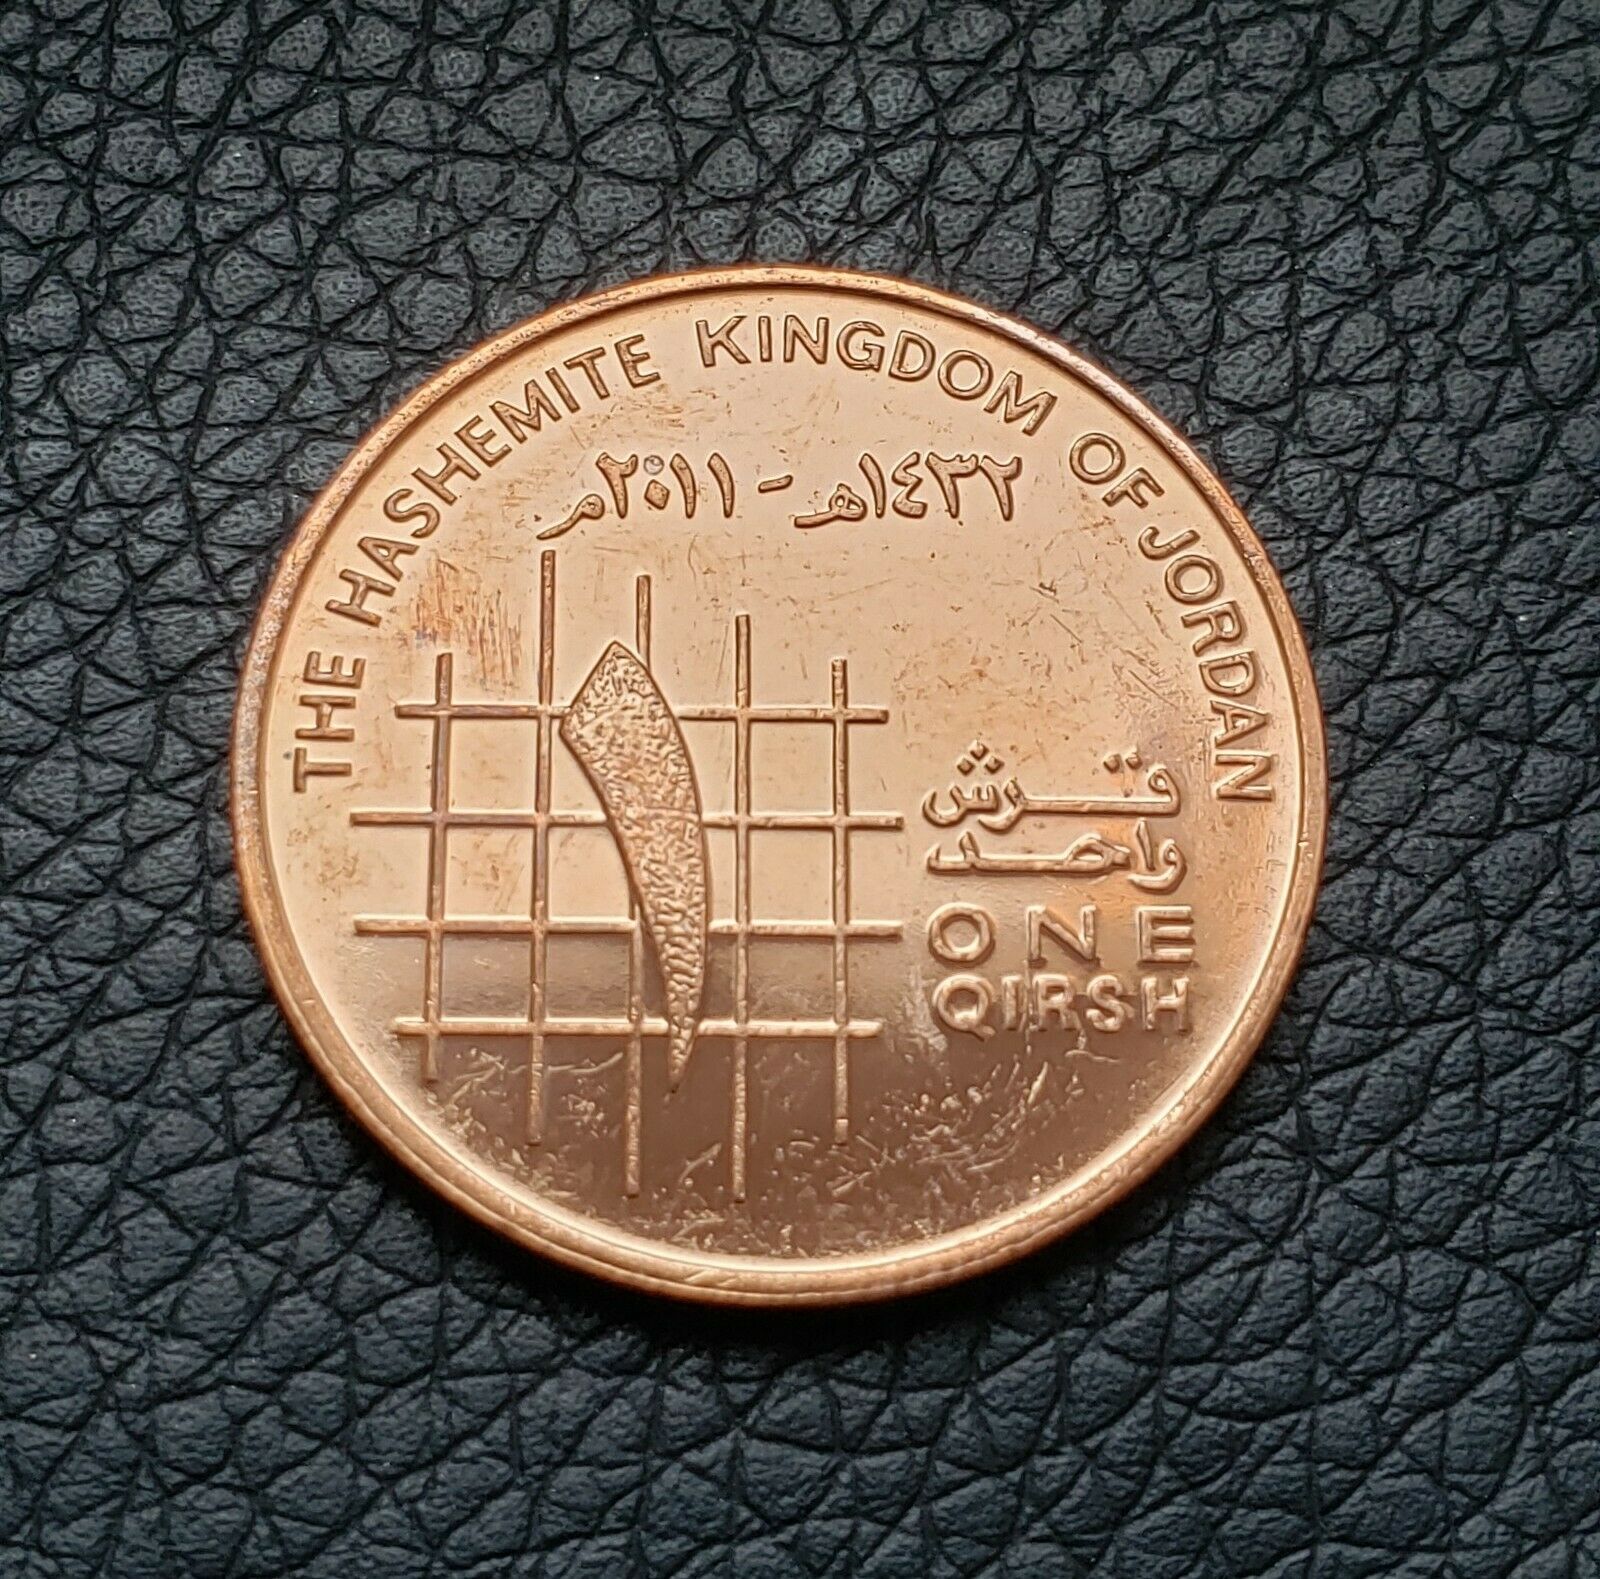 2009 Jordan 1 Qirsh Coins